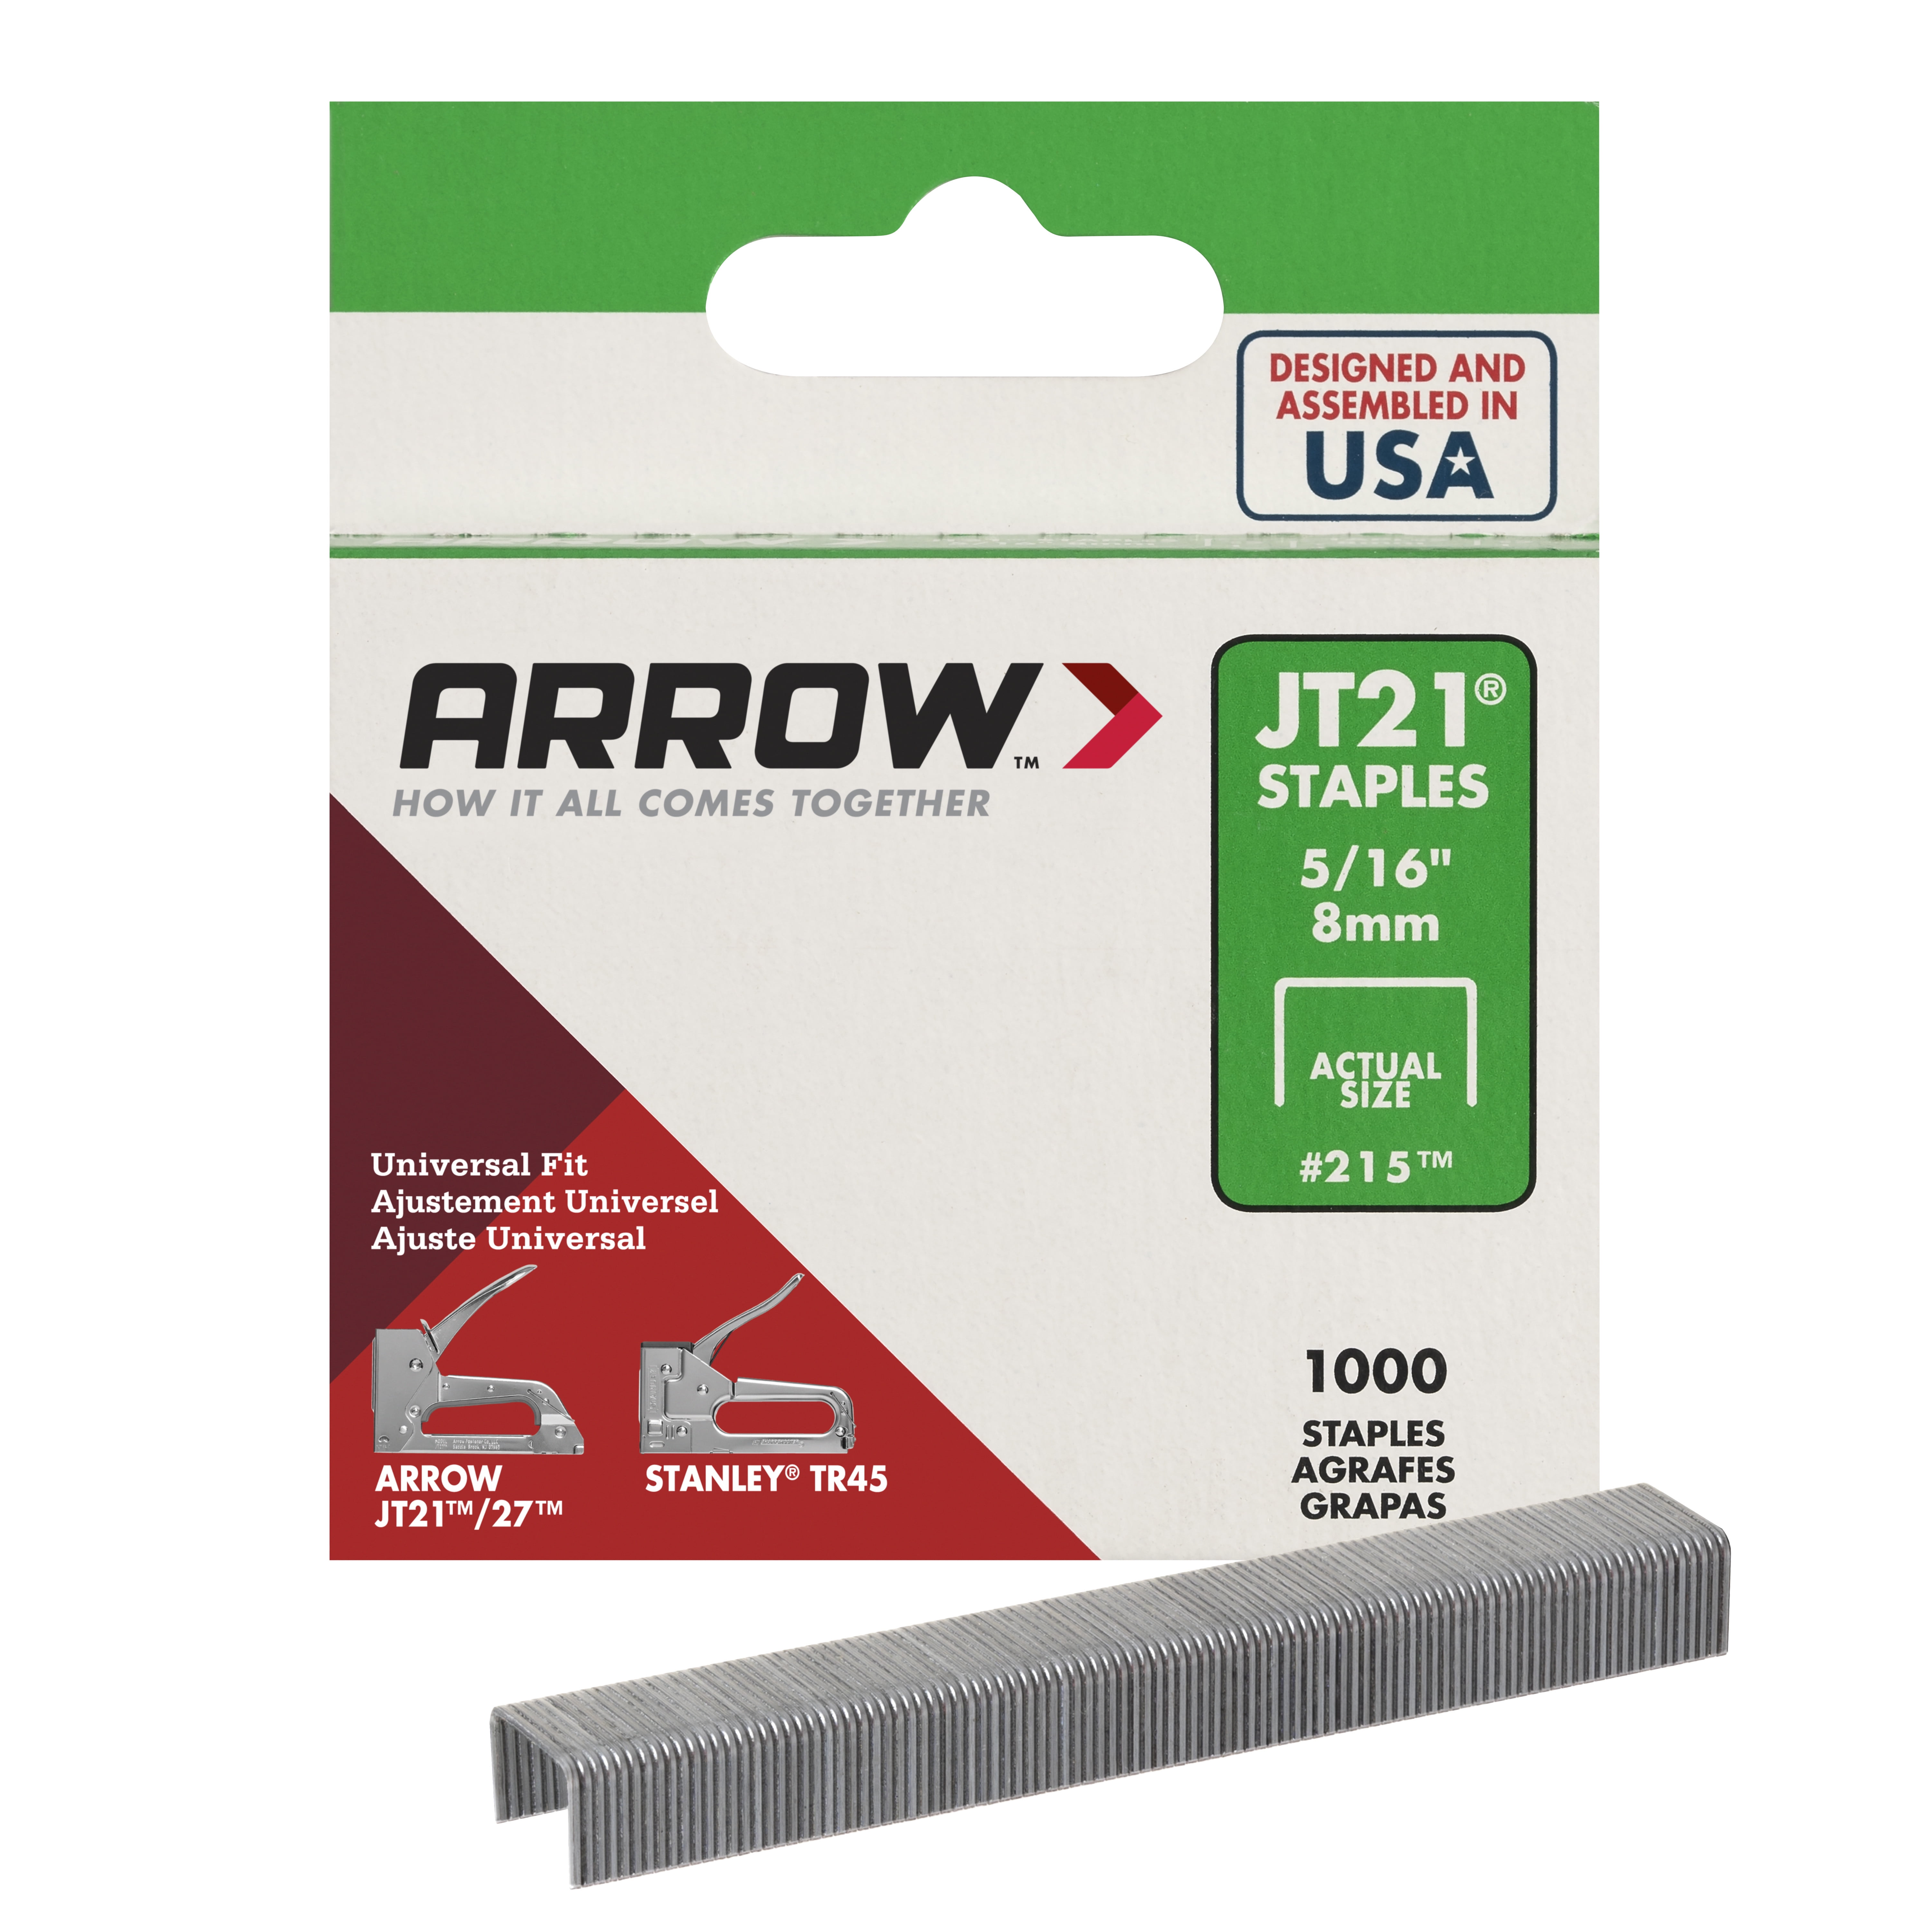 5/16inch Arrow Fastener JT21 T27 8mm Staples Box of 1000 #215 